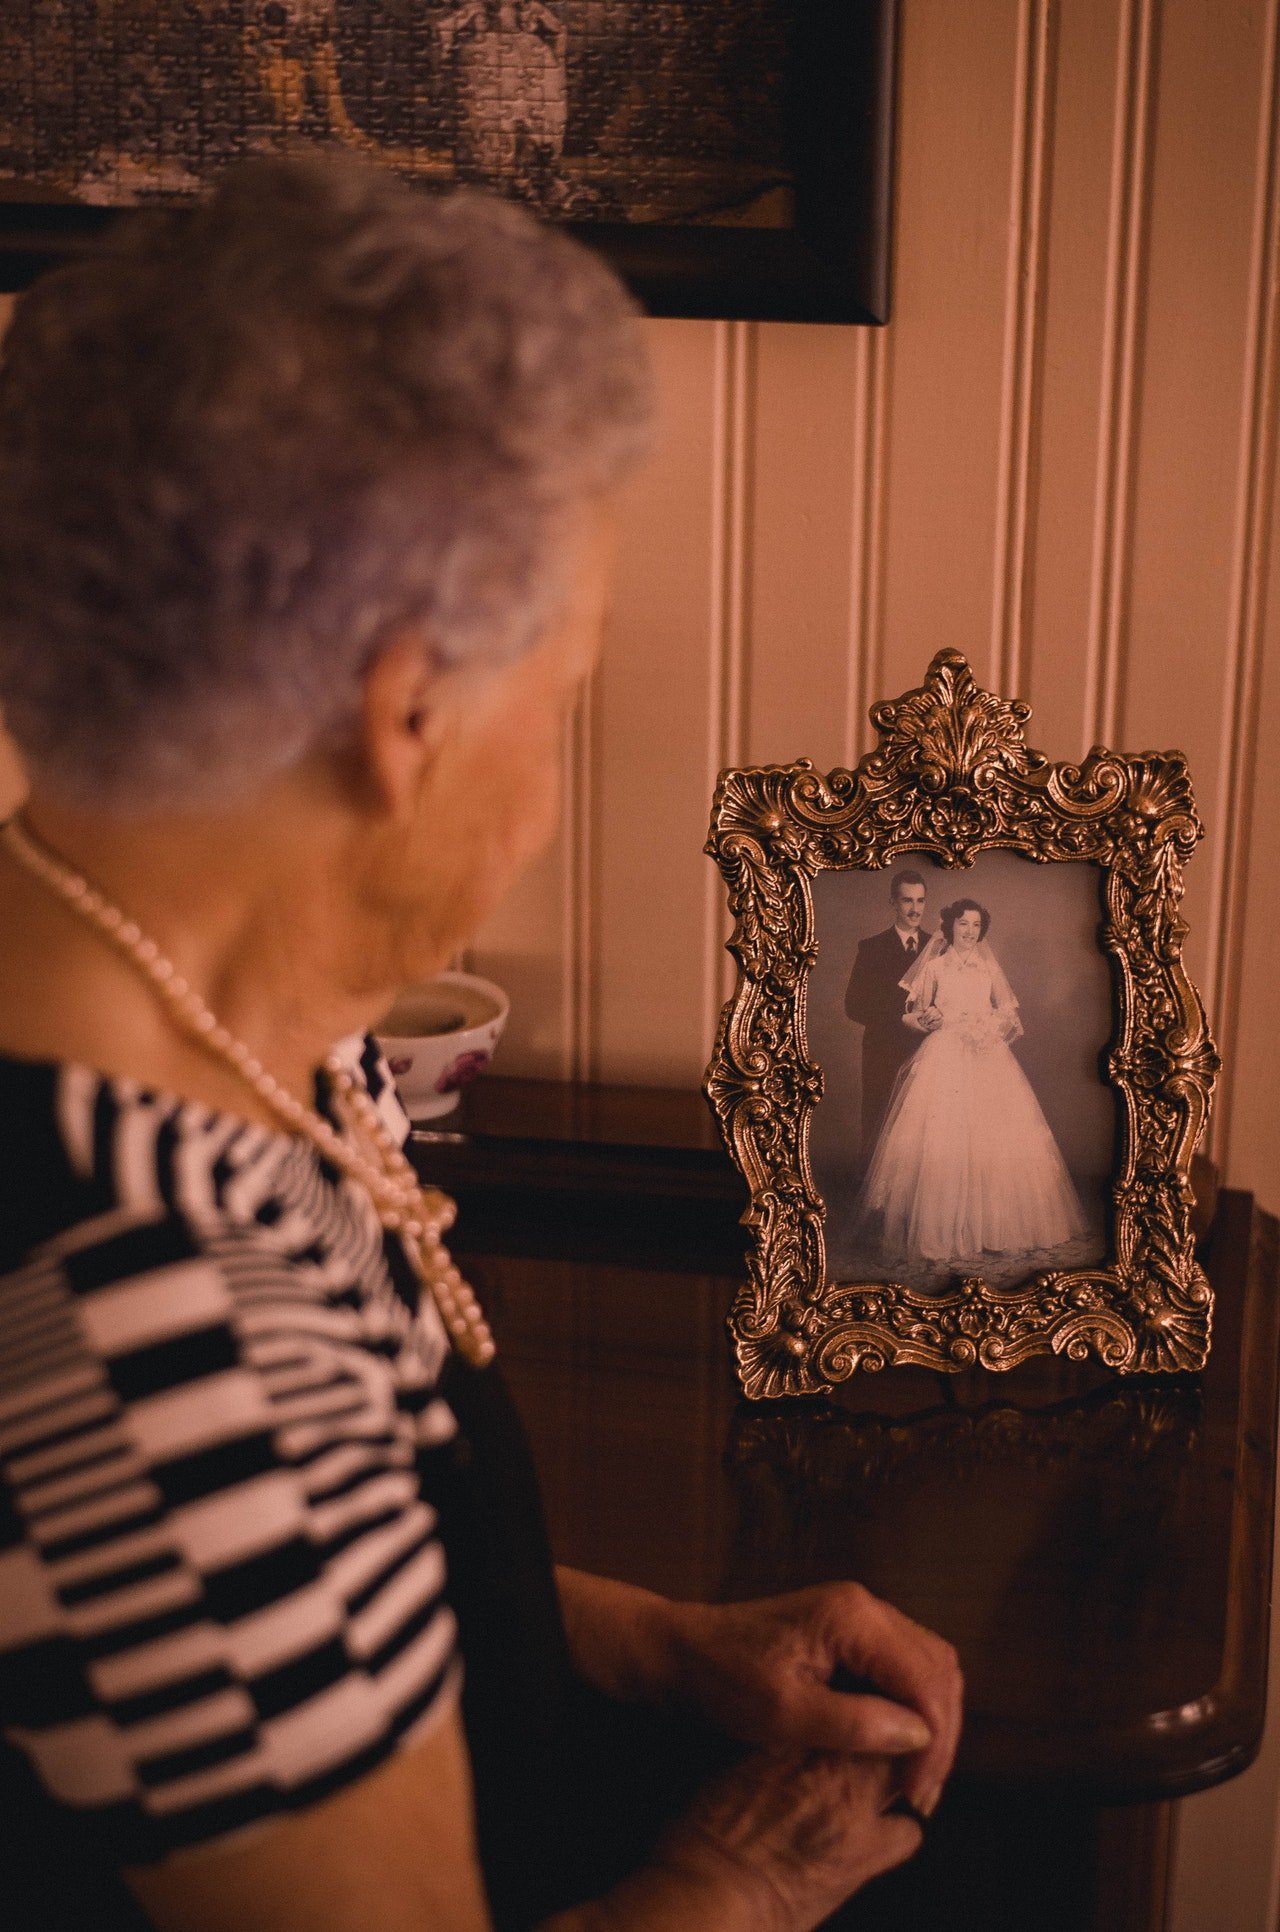 Grandmother looking at portrait | Source: Pexels